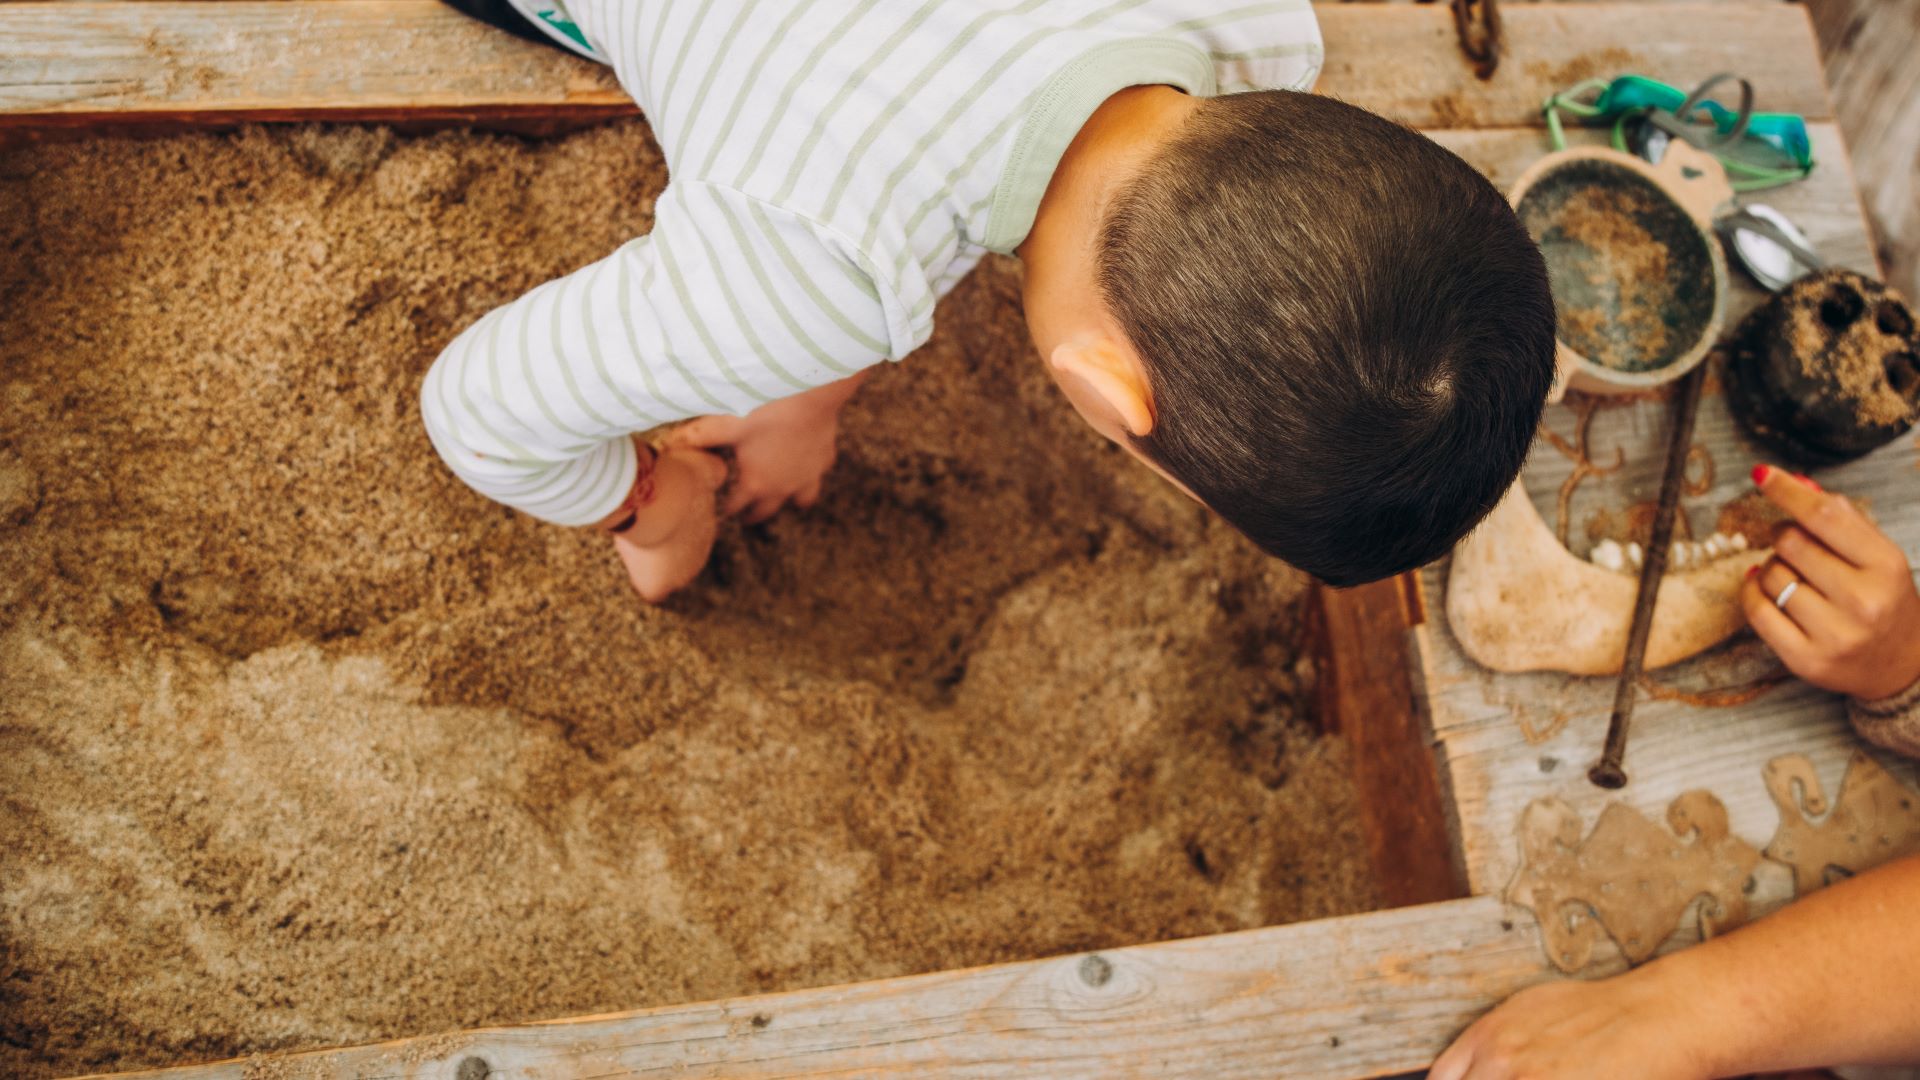 A child digs in a sandbox.